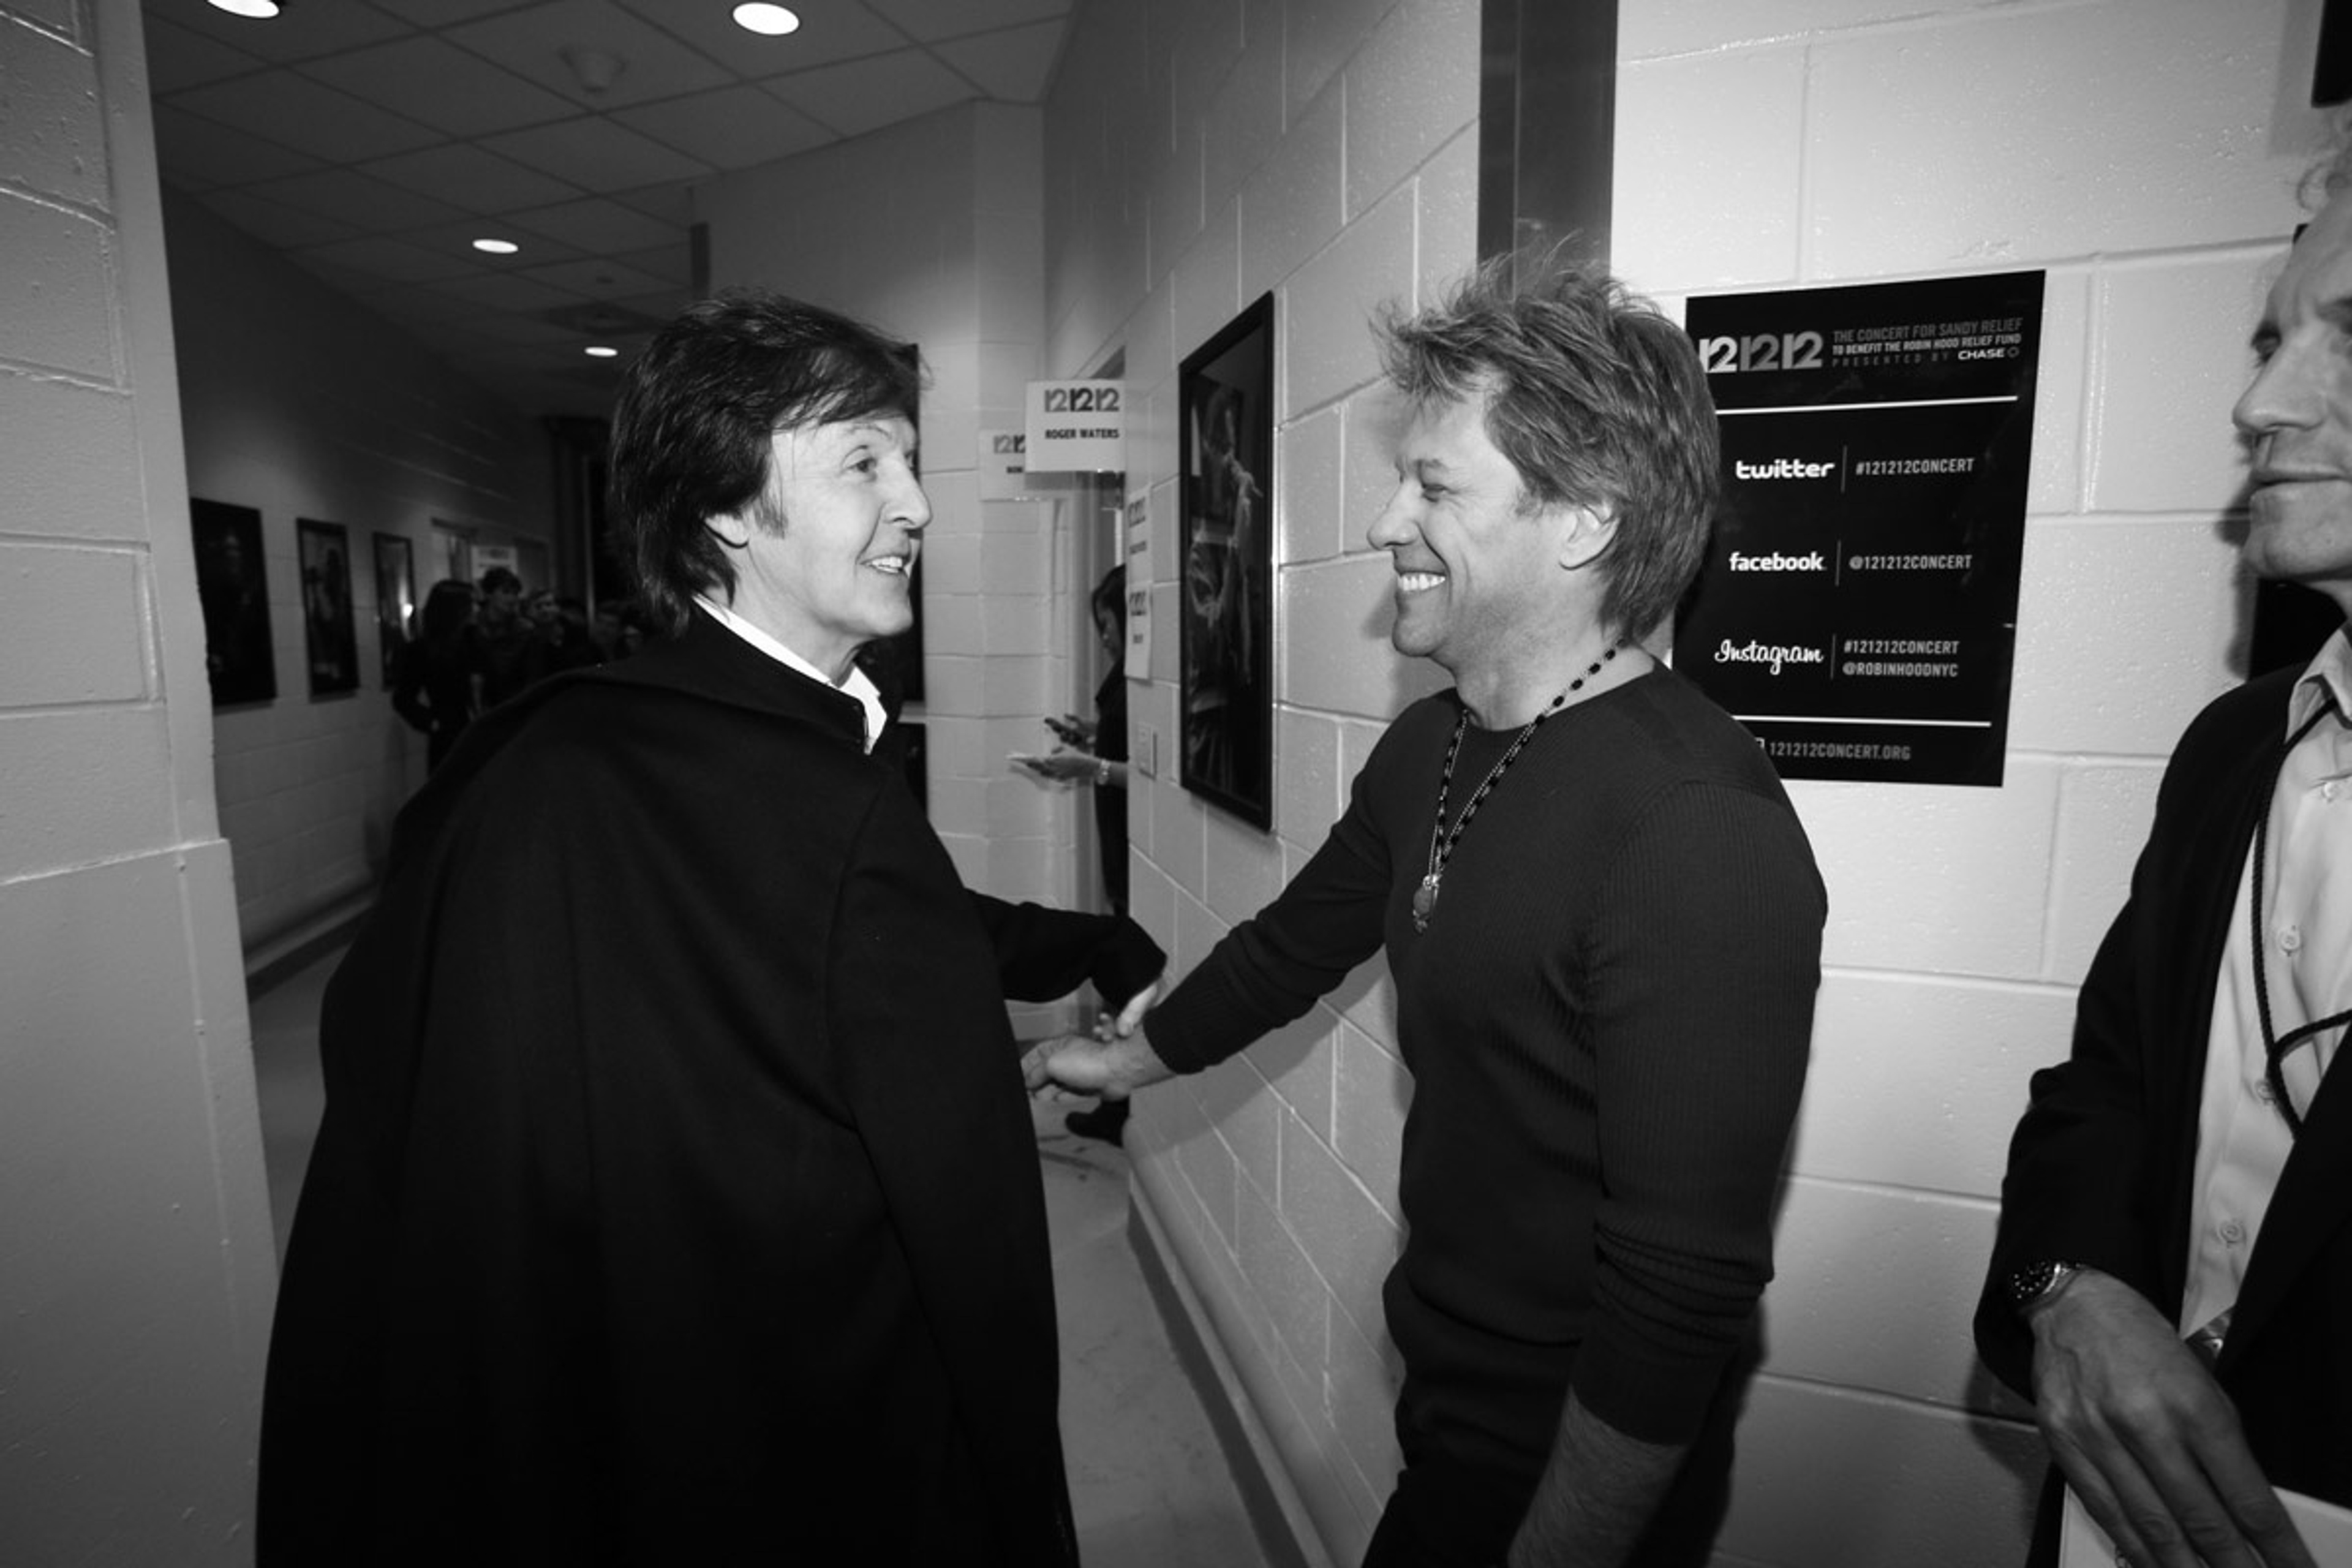 Paul backstage with Jon Bon Jovi, 12-12-12 Hurricane Sandy Benefit, Madison Square Garden, NYC, 12th December 2012